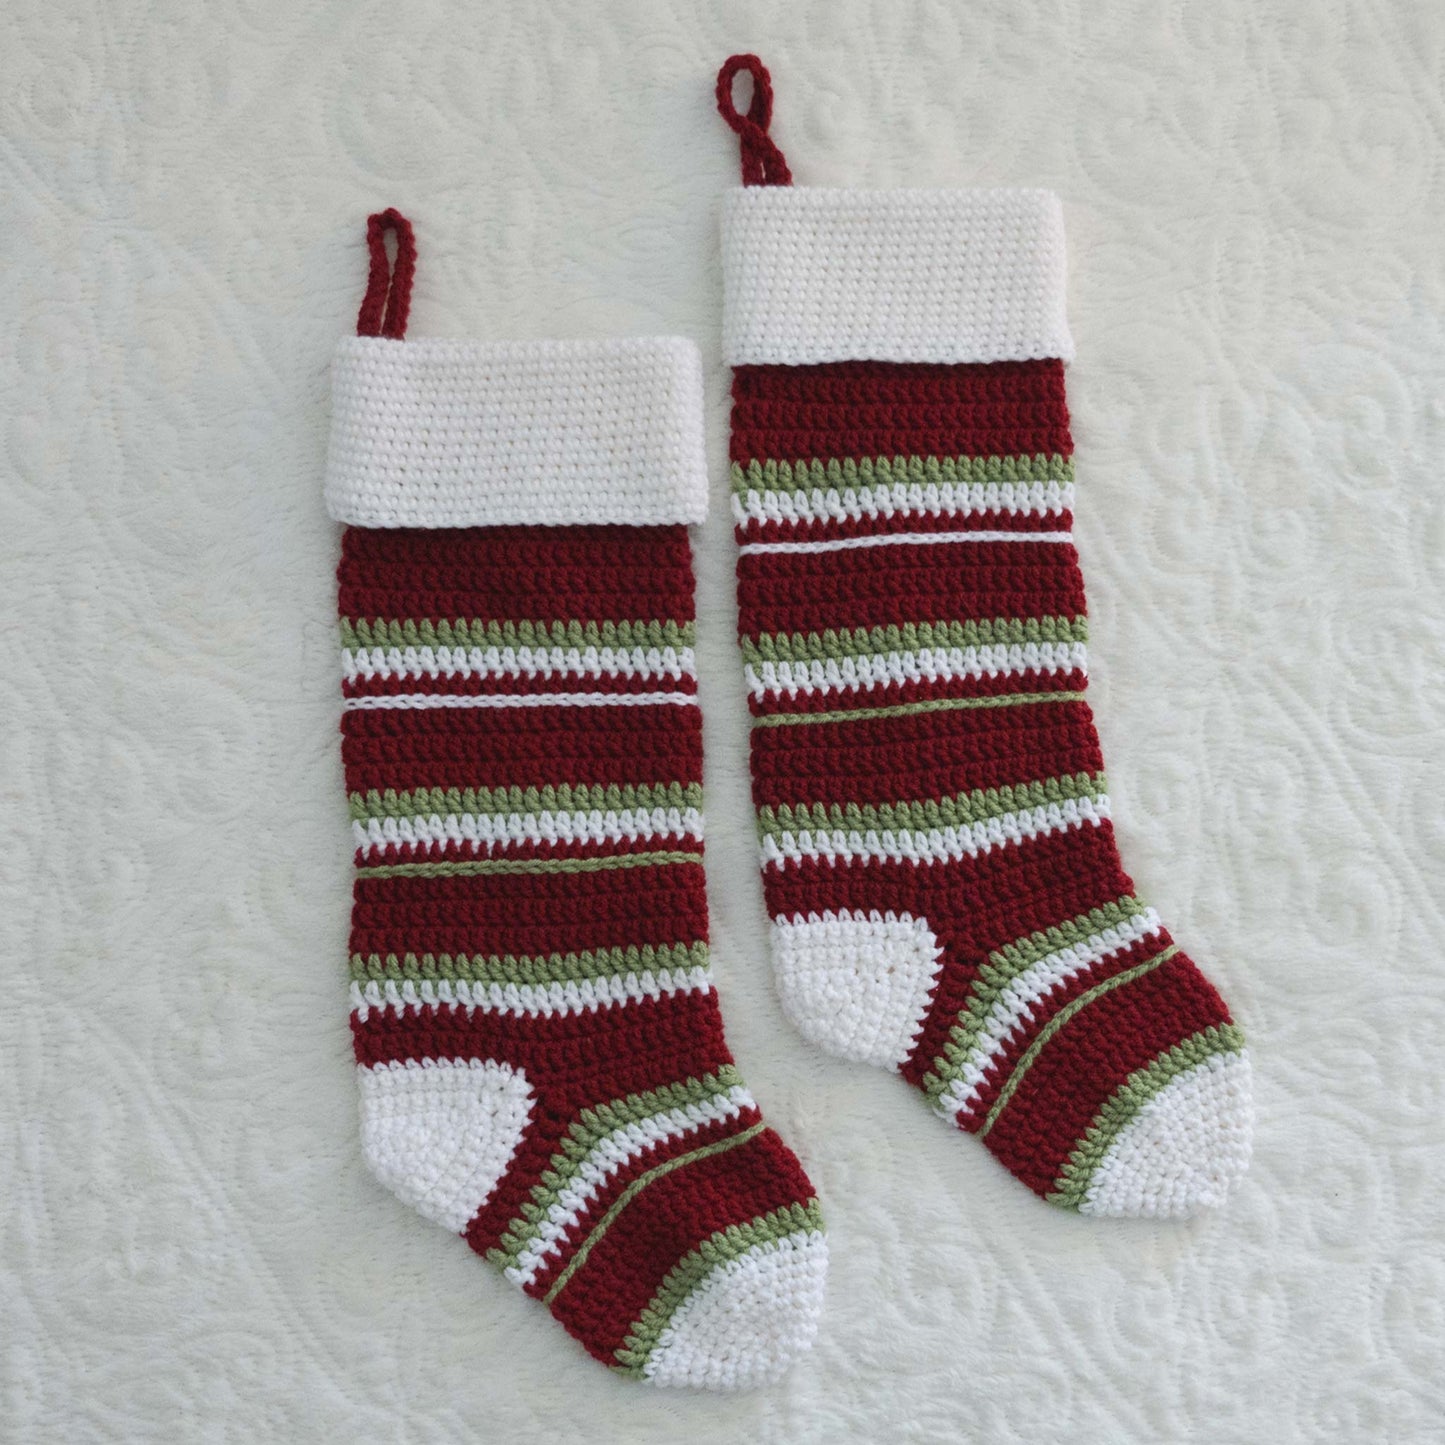 Striped Crochet Christmas Stockings PDF